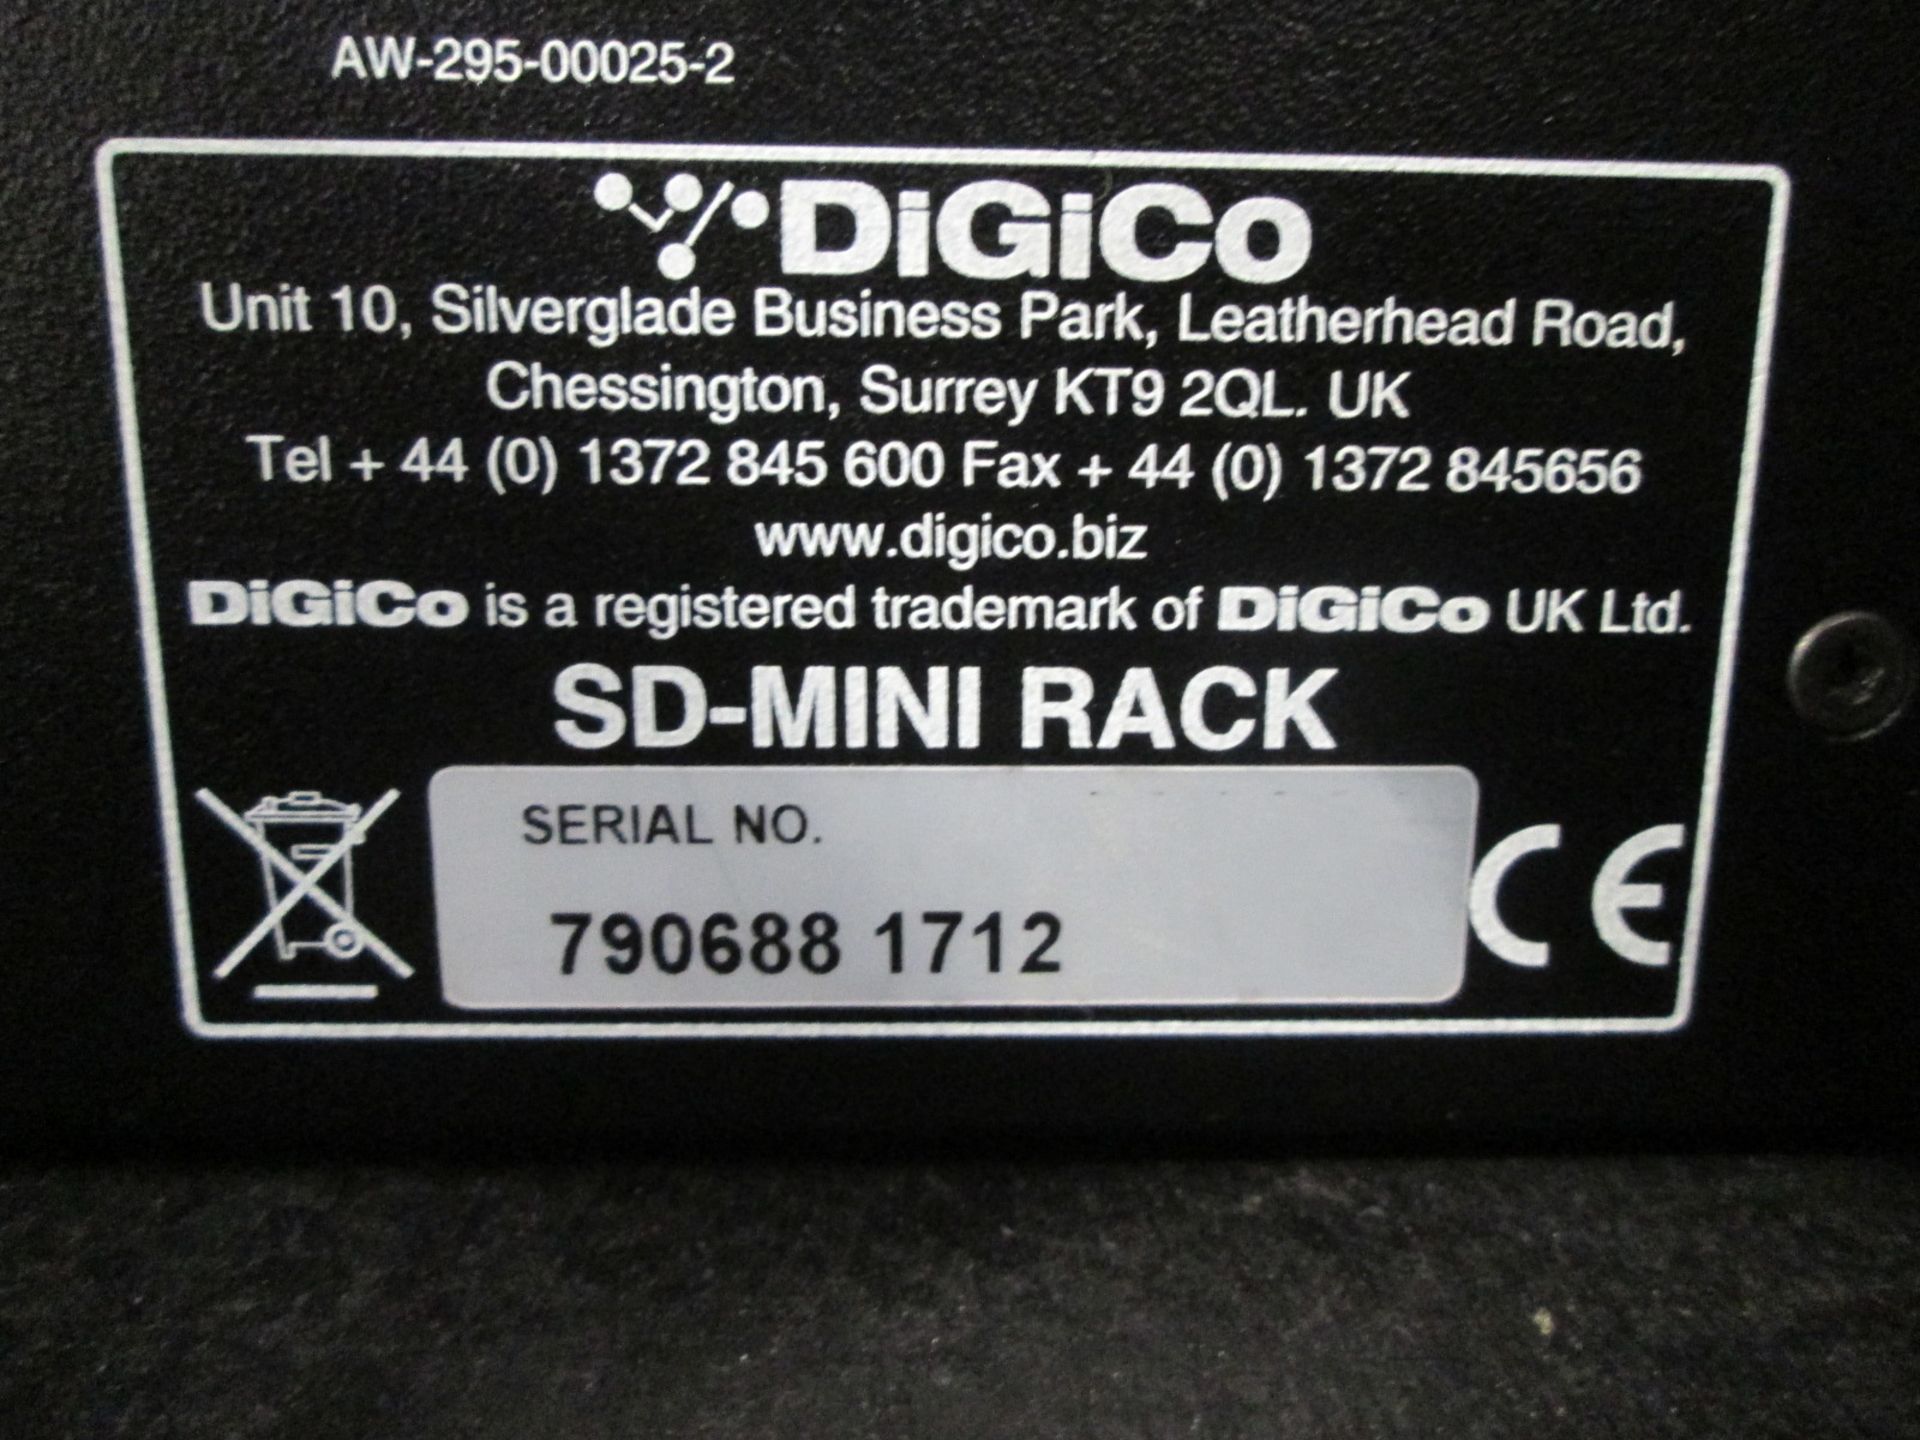 DigiCo SD-Mini Rack Input / Output Frame. S/N 790688 1712 - Image 4 of 8